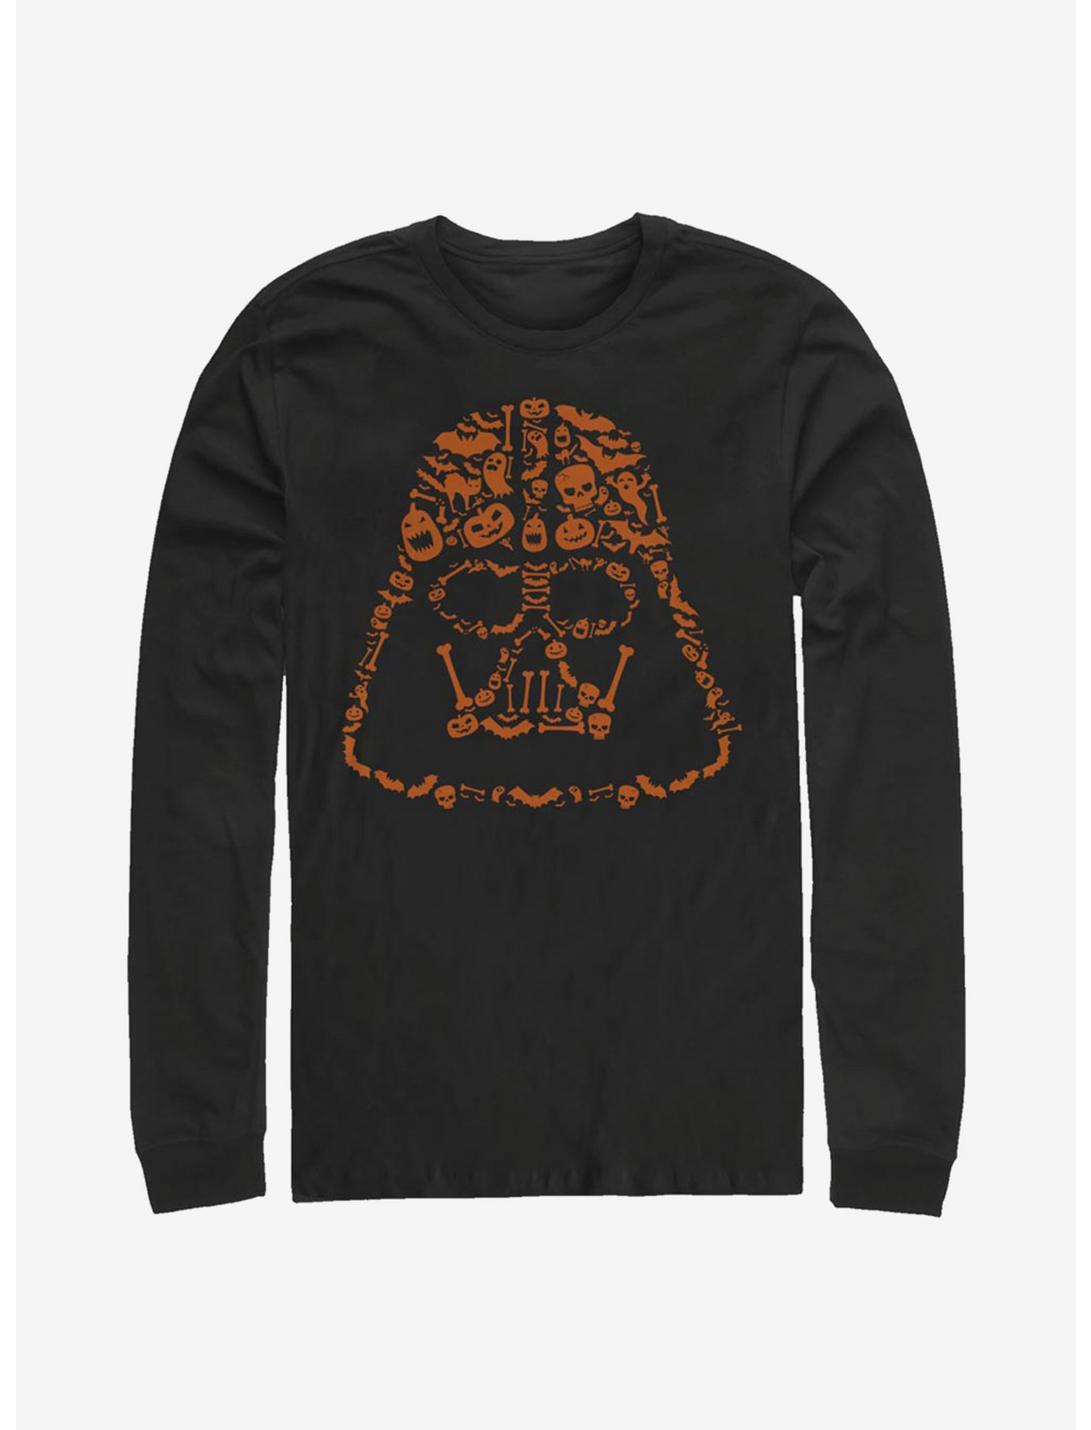 Star Wars Darth Vader Jackolanterns Long-Sleeve T-Shirt, BLACK, hi-res